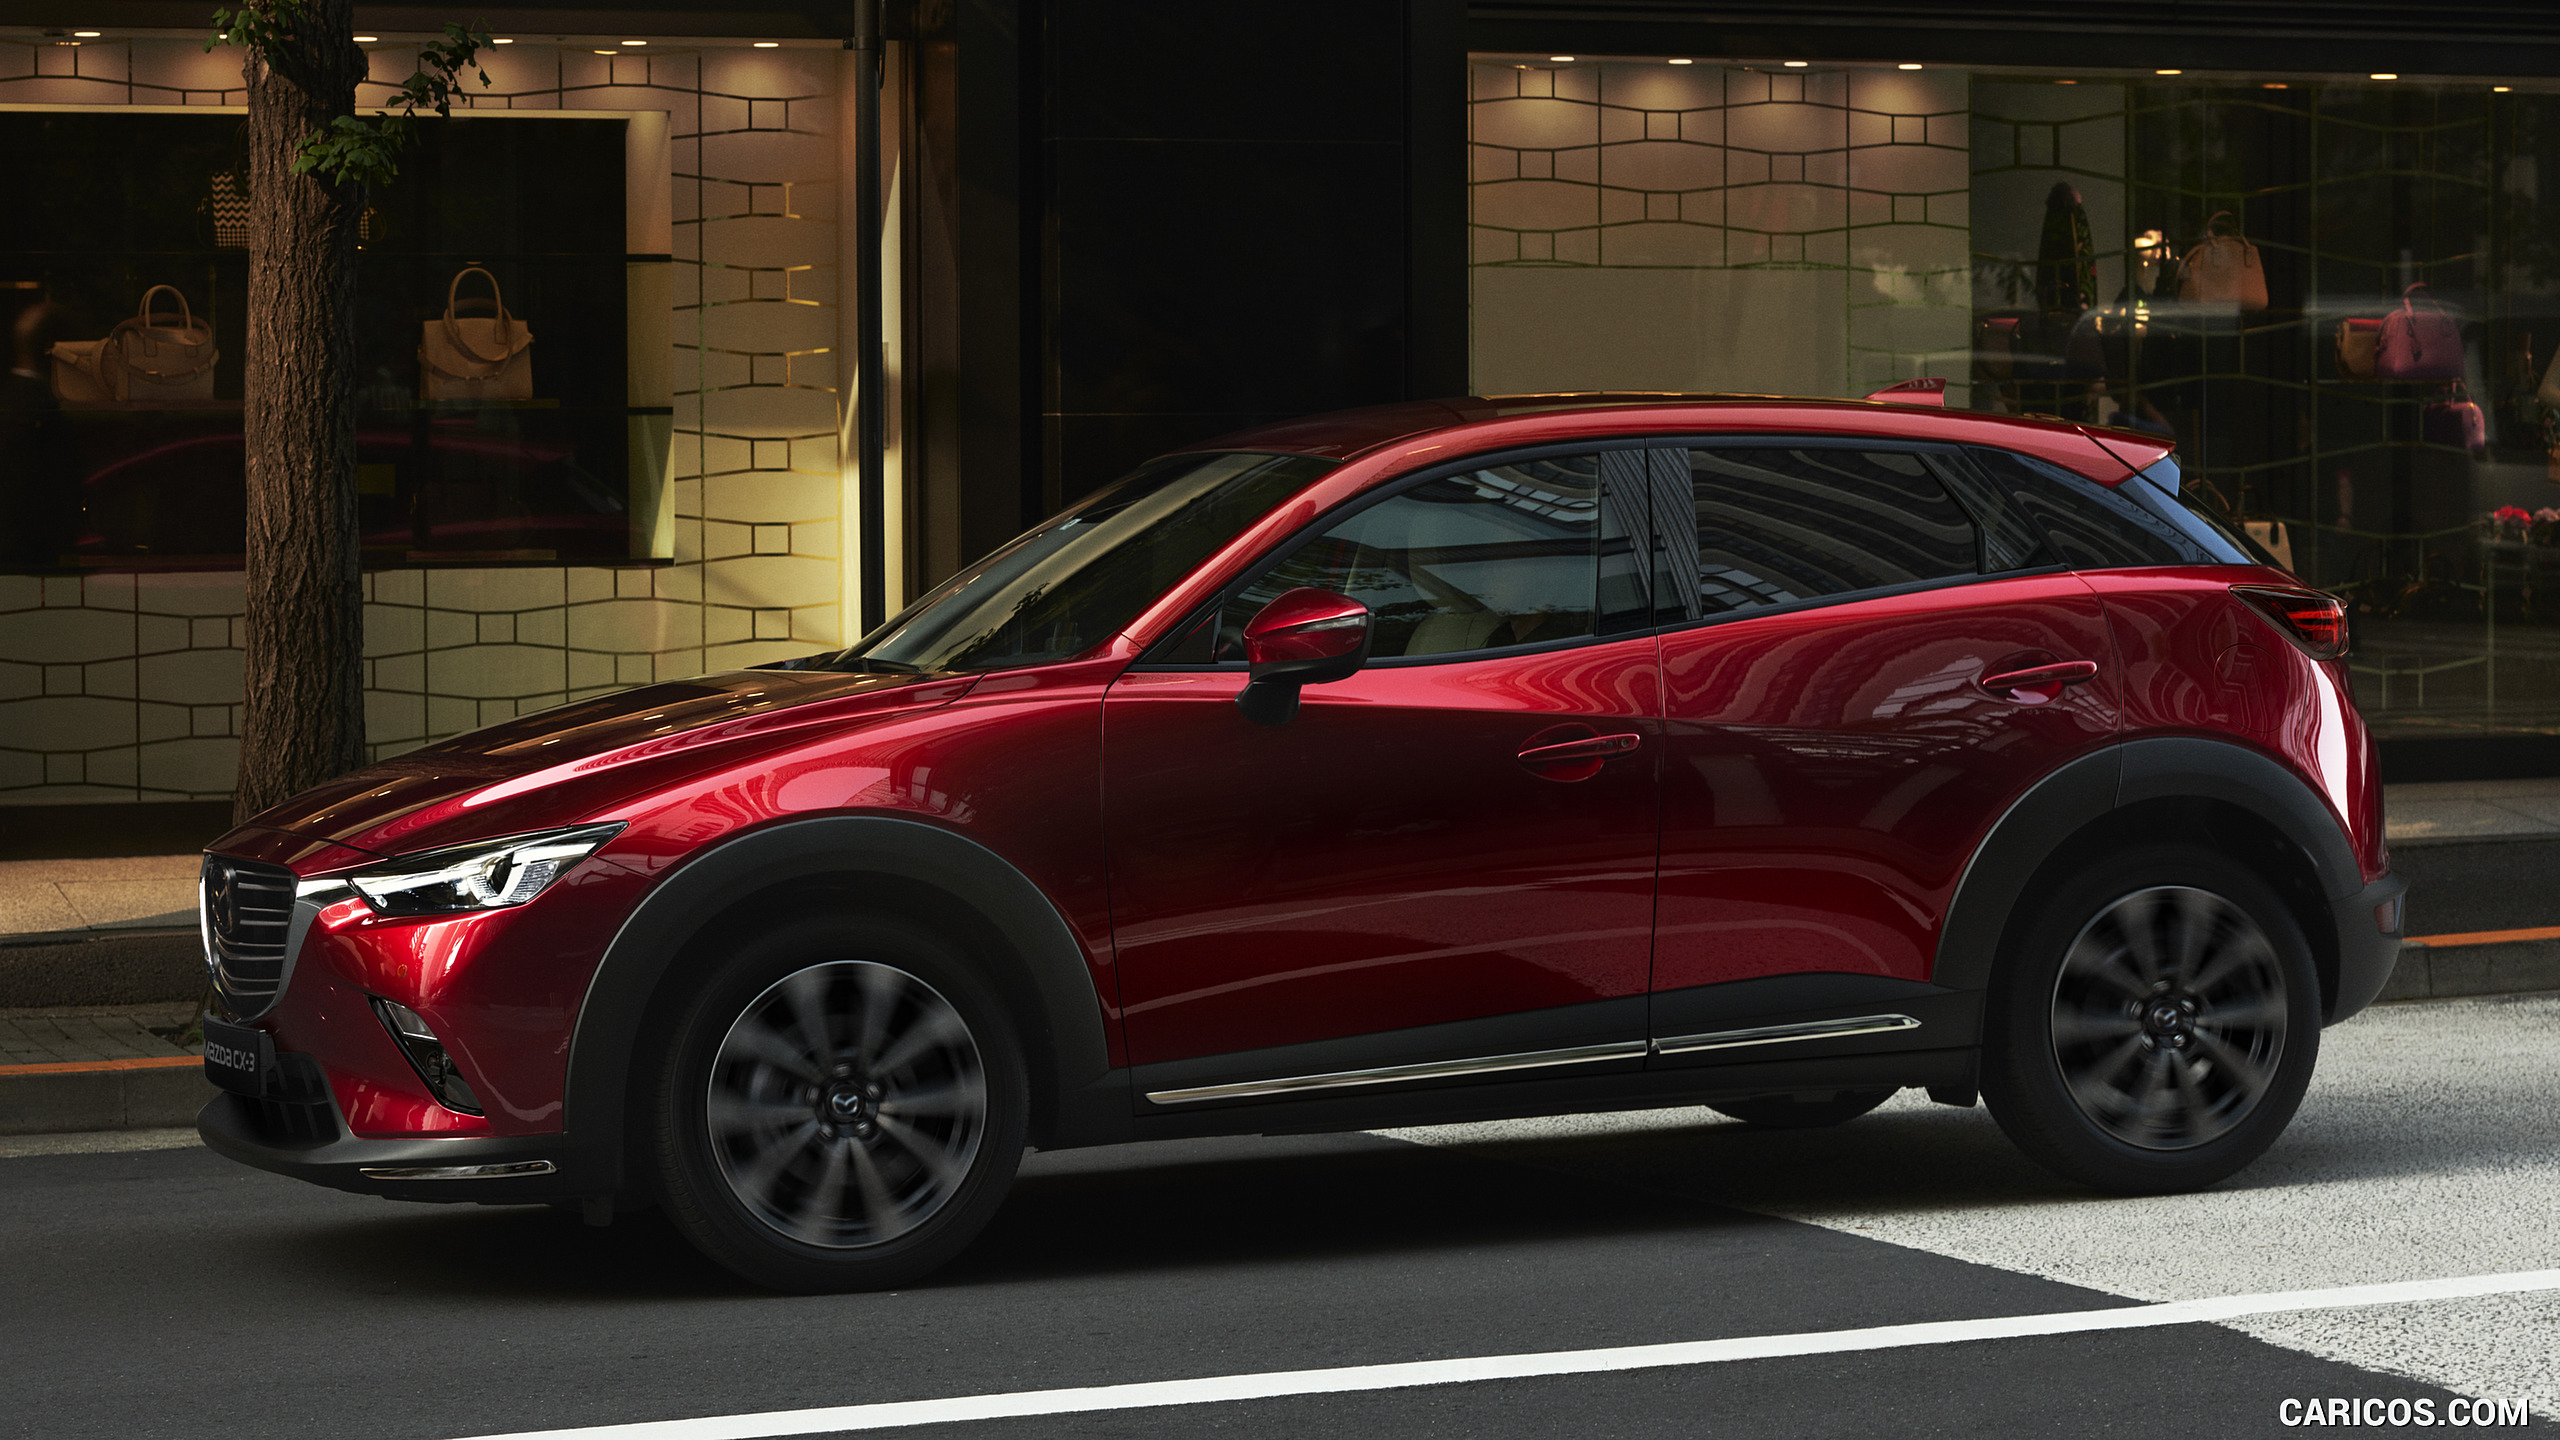 2019 Mazda CX-3 - Front Three-Quarter, #1 of 85